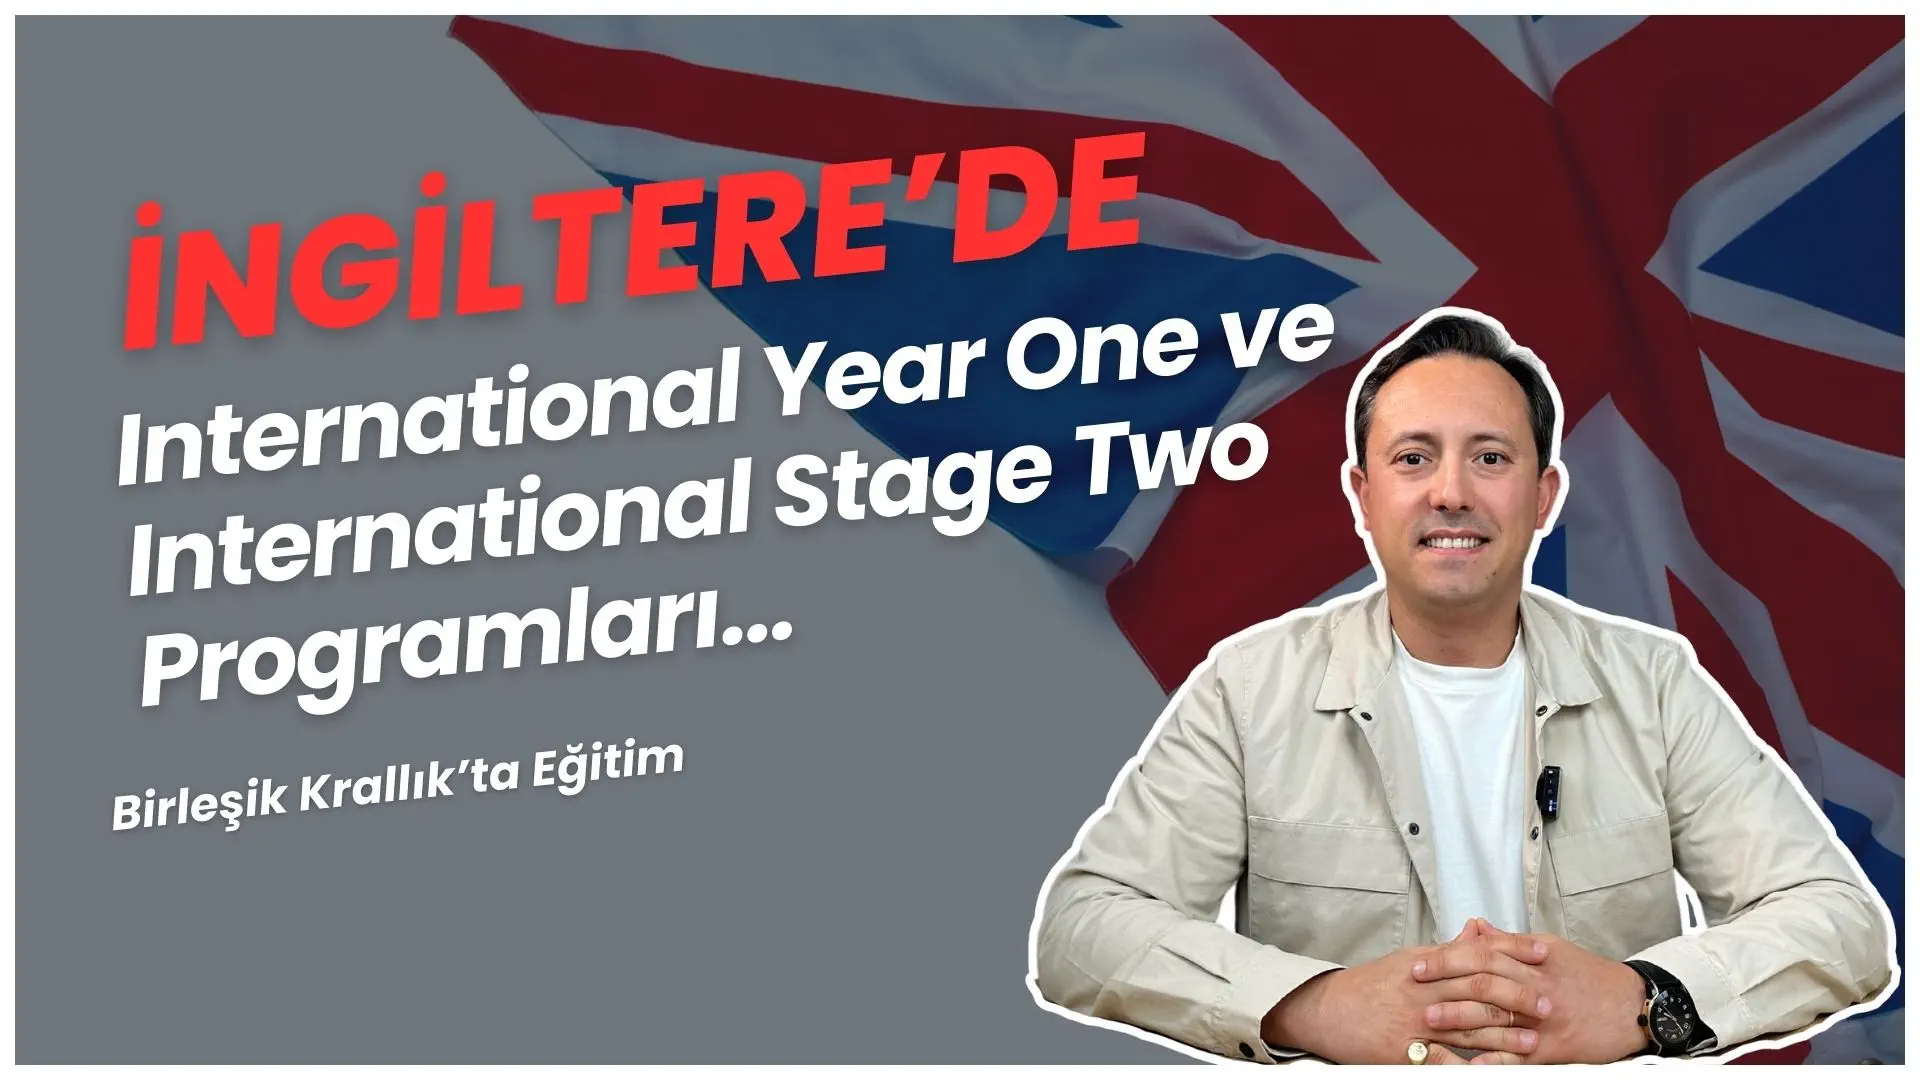 İngiltere’de International Year One ve International Stage Two Programları